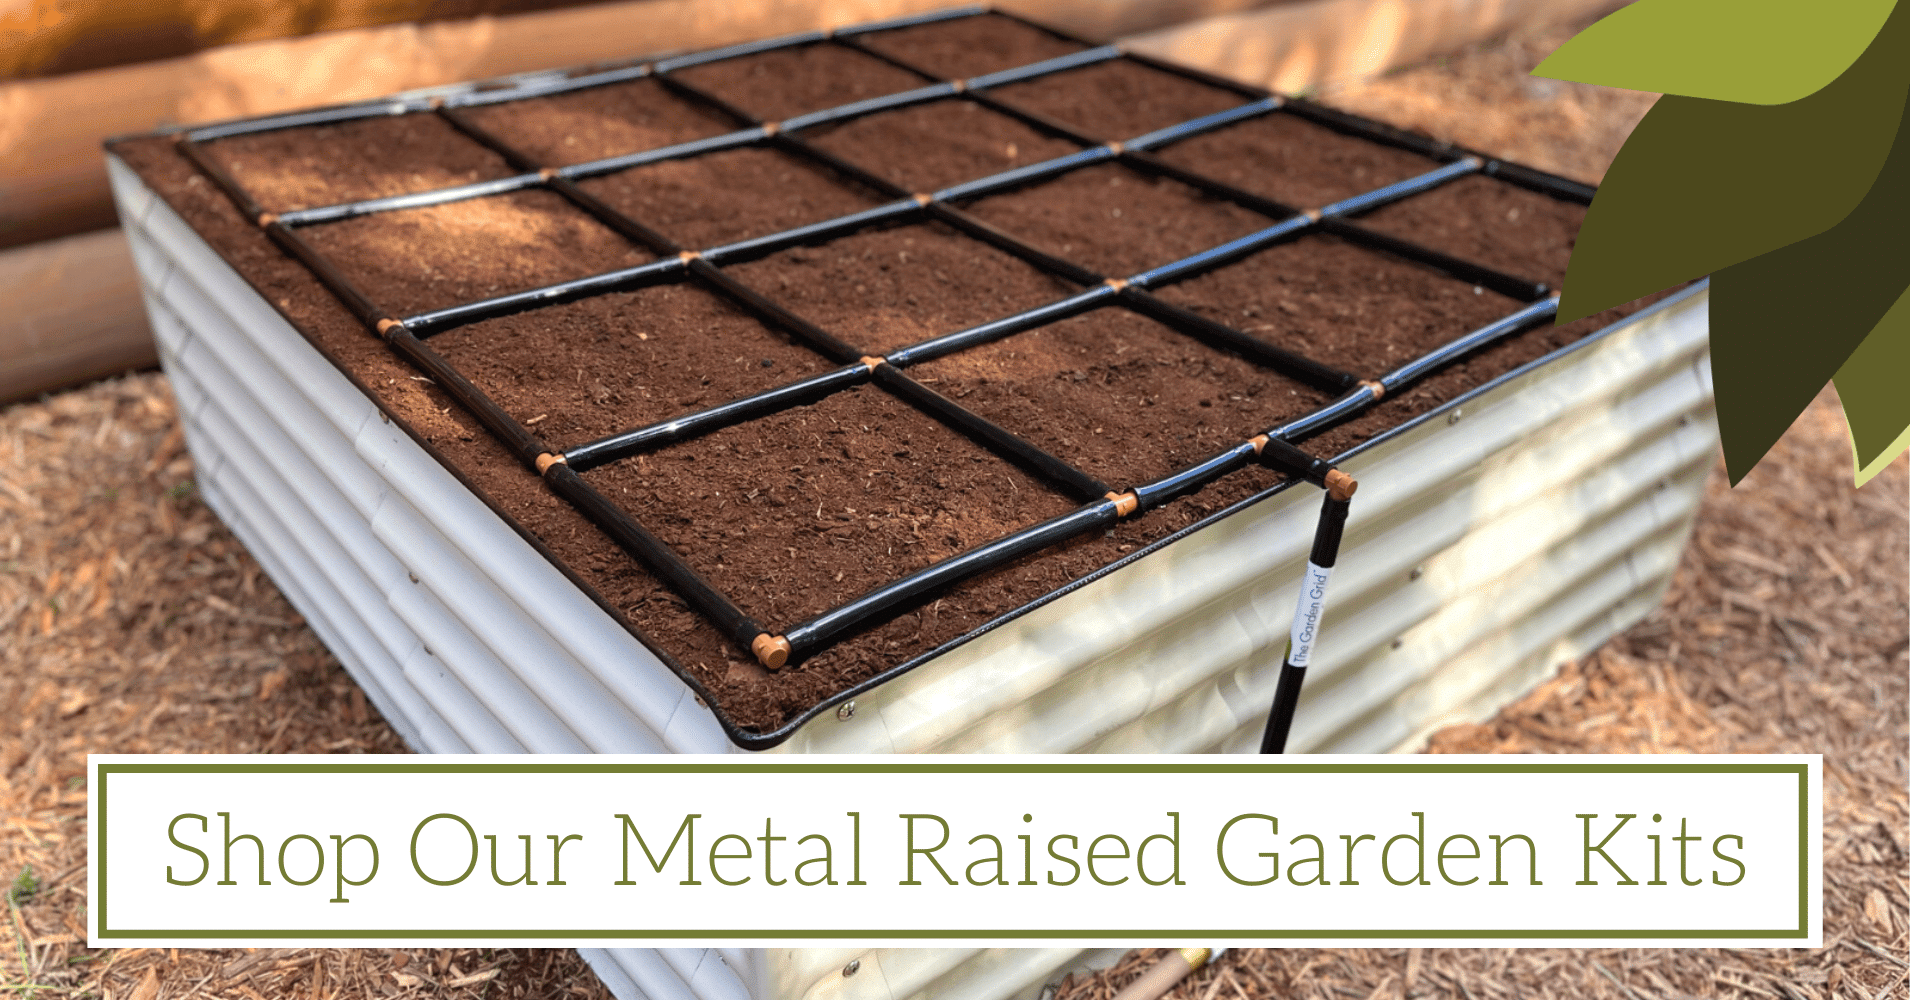 Metal Raised Garden Beds with Garden Grids Footer Image